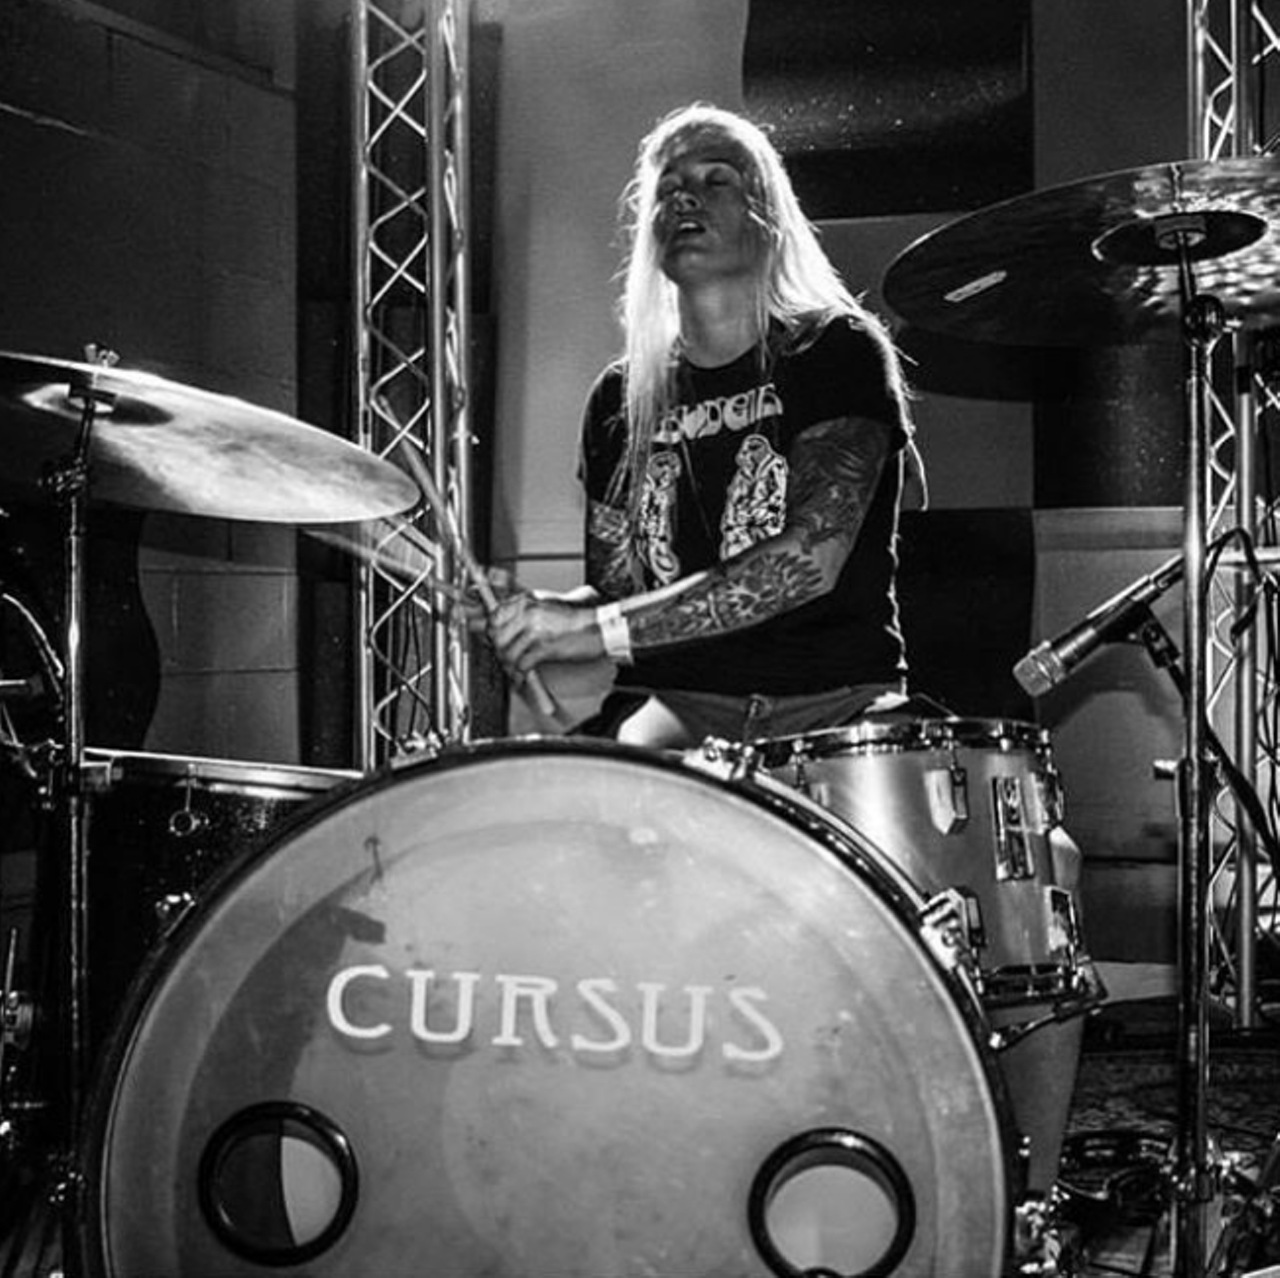 Sarah Roork
One-half of the doom-metal two-piece Cursus, drummer Sarah Roork opens the gateways to netherworlds with her heavy, slow drum hits.
Photo via Instagram / zombiejuanita